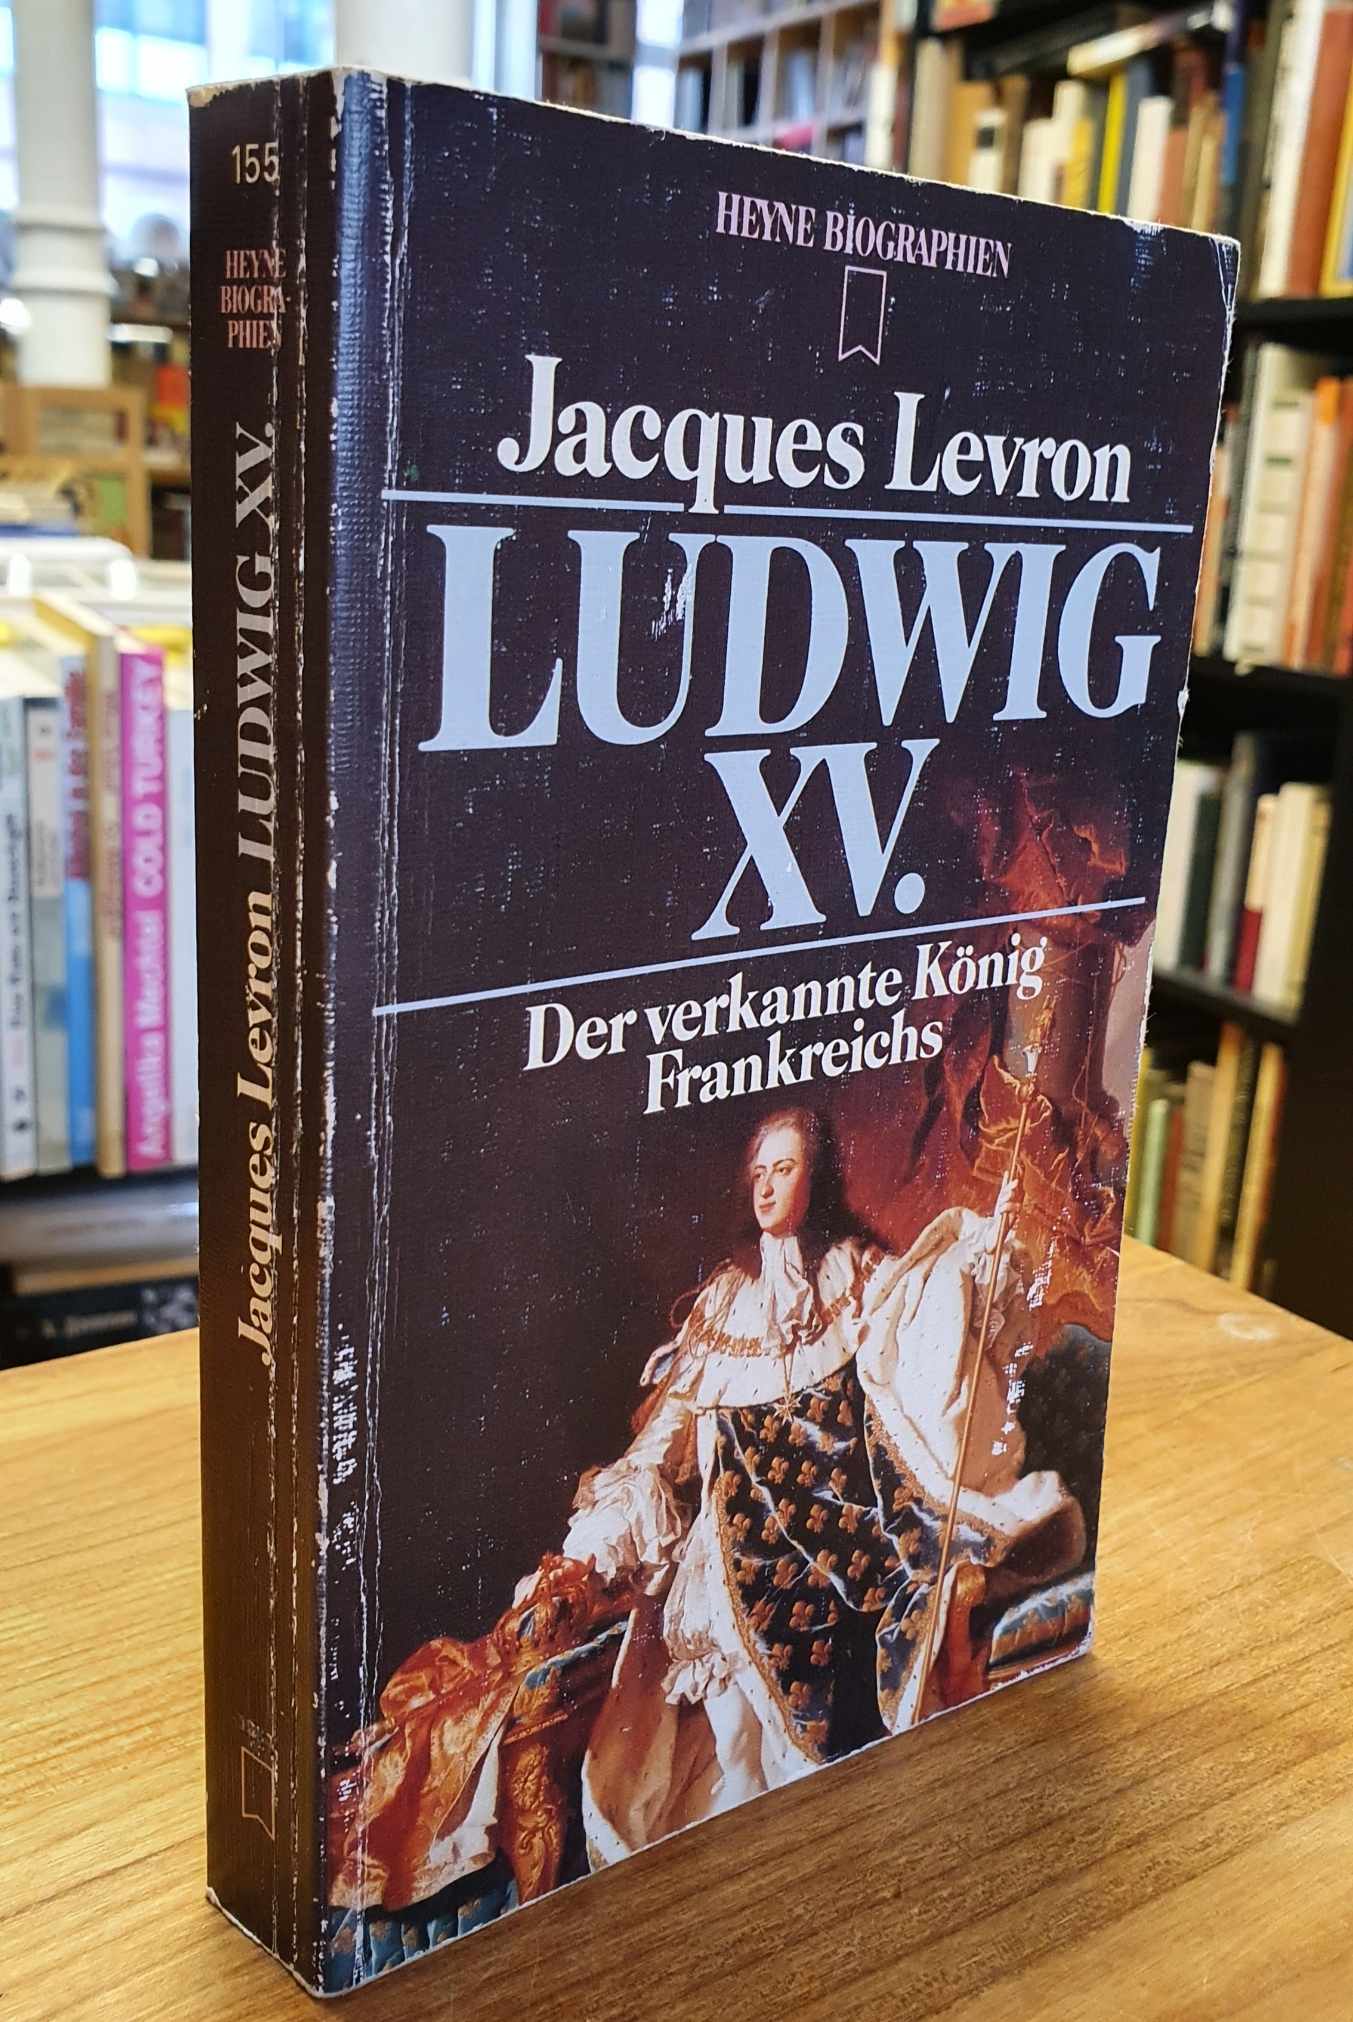 Levron, Ludwig XV – Der verkannte König Frankreichs,